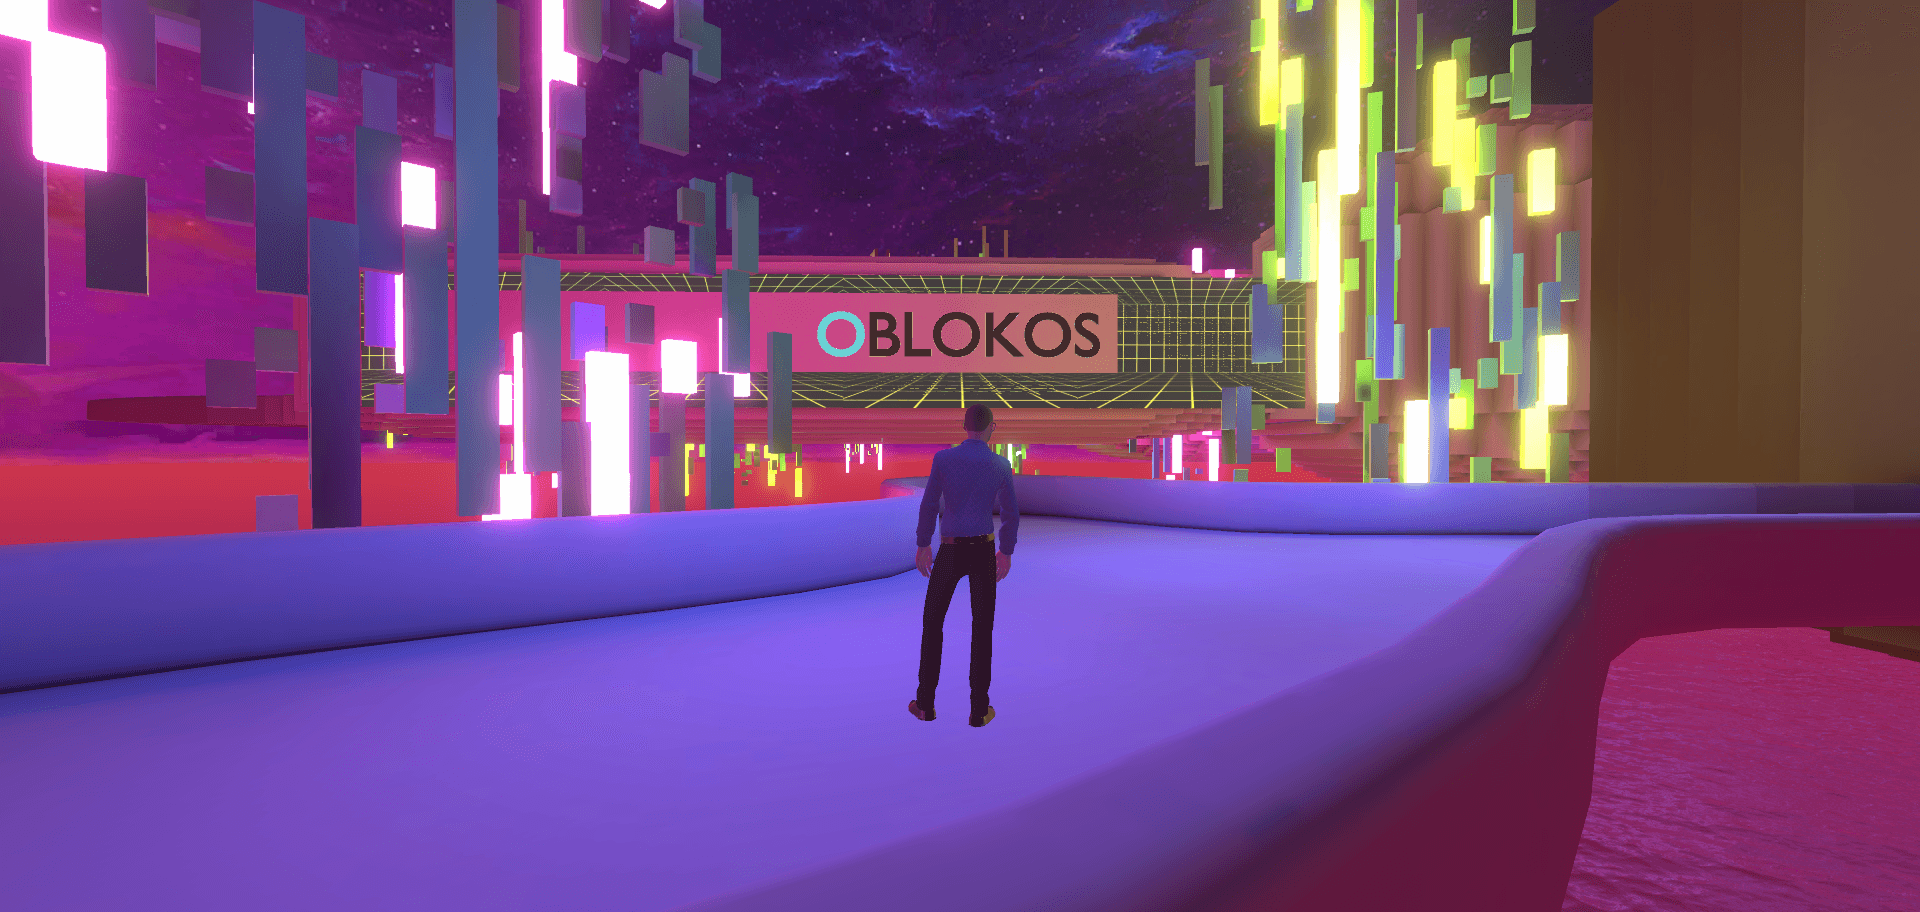 Oblokos_Artist banner